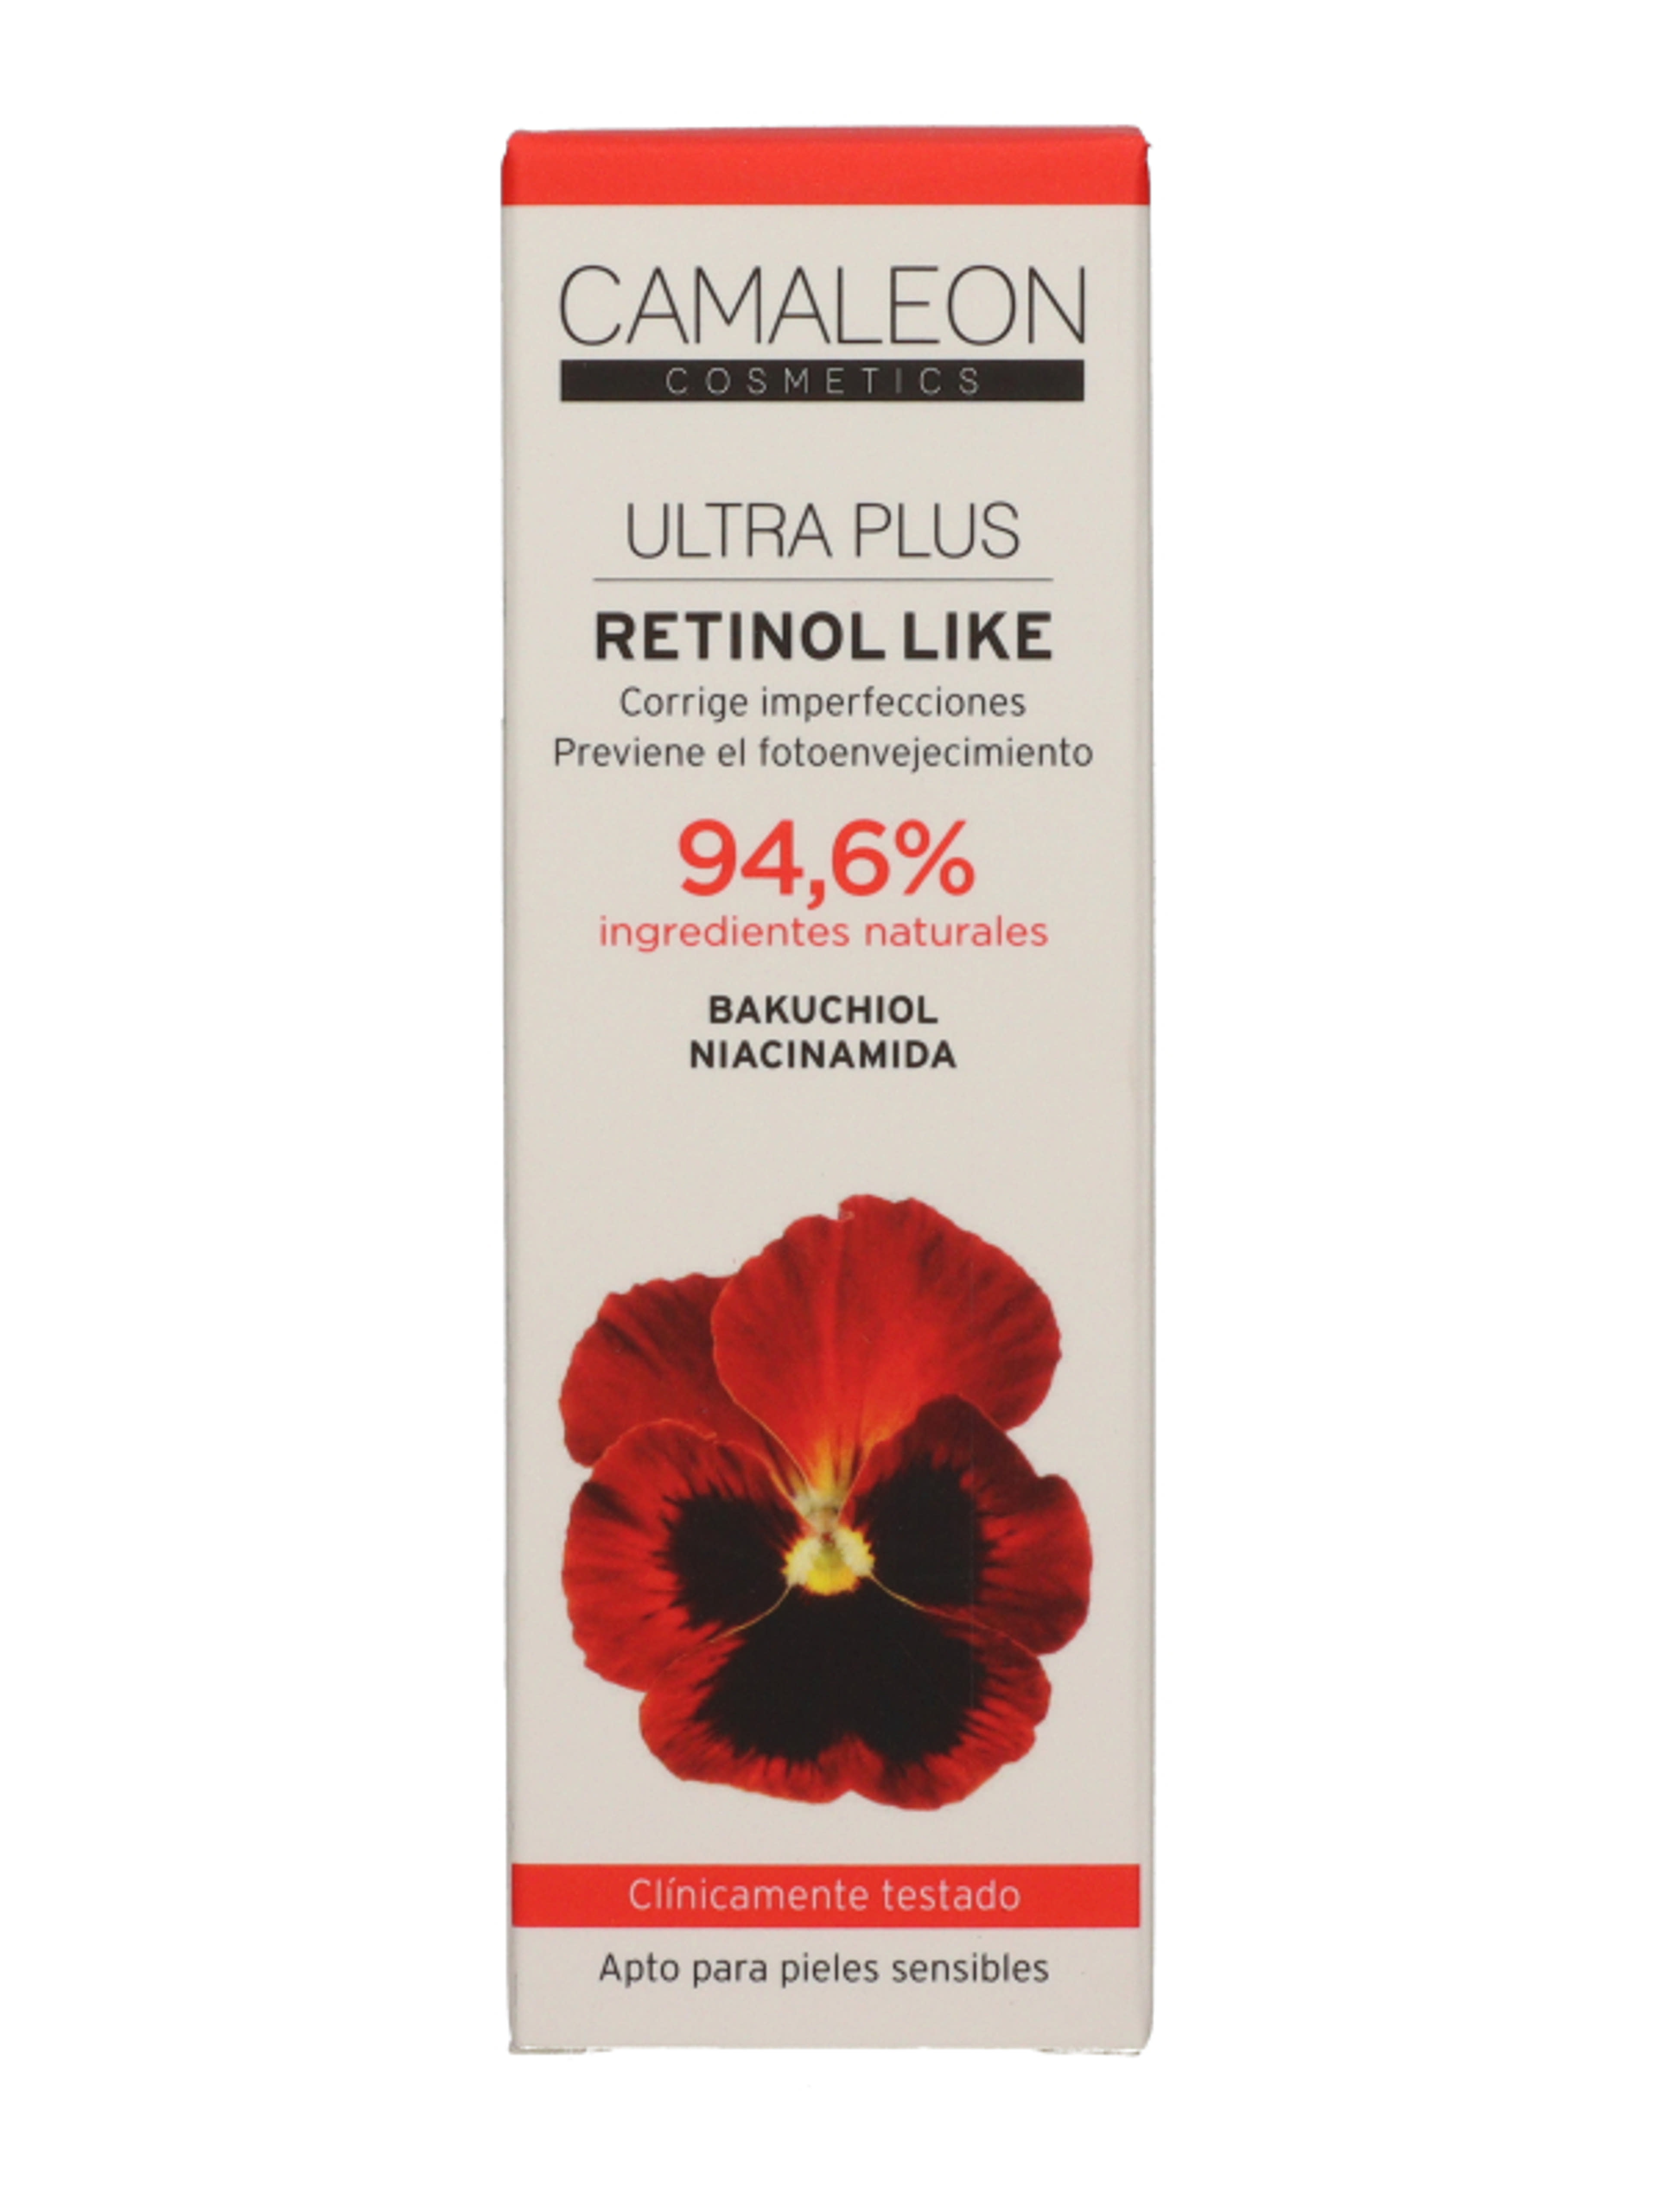 Camaleon Ultra Plus Retinol Like szérum - 15 ml